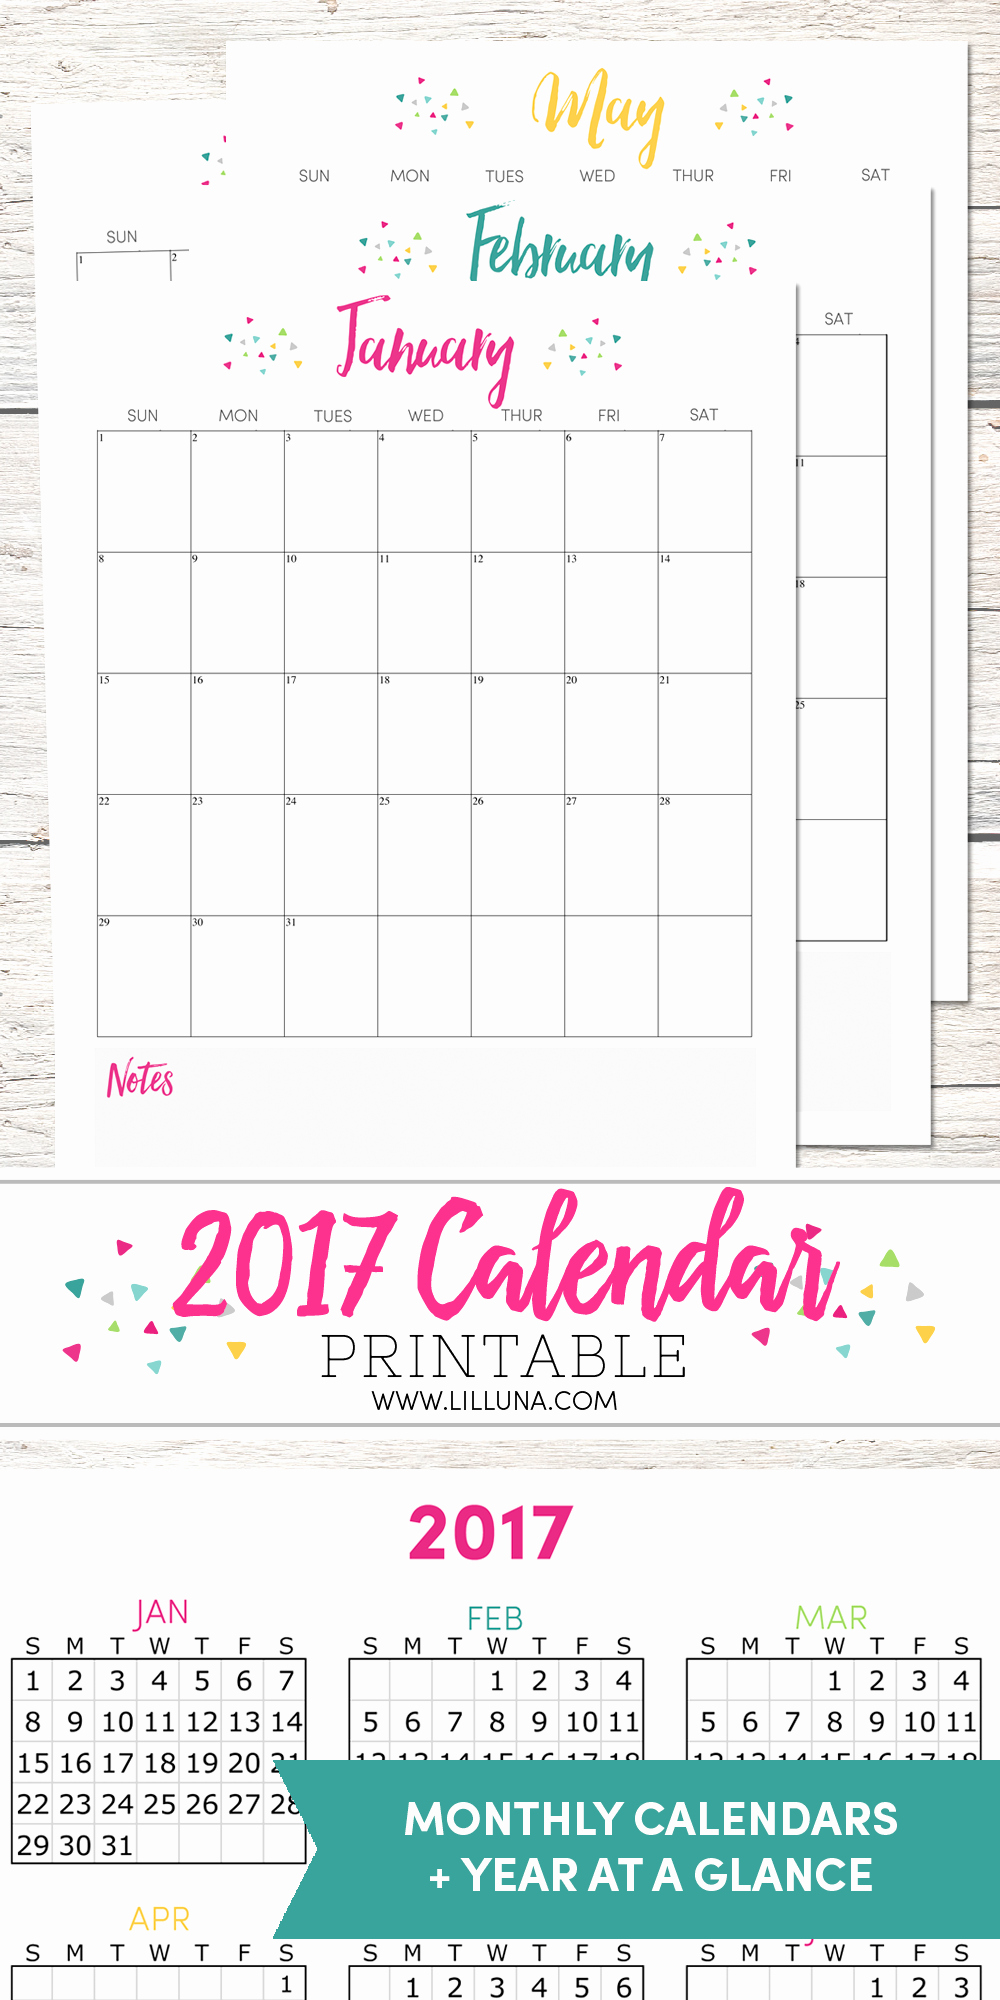 2017 Calendar Template with Notes New Free 2017 Calendar